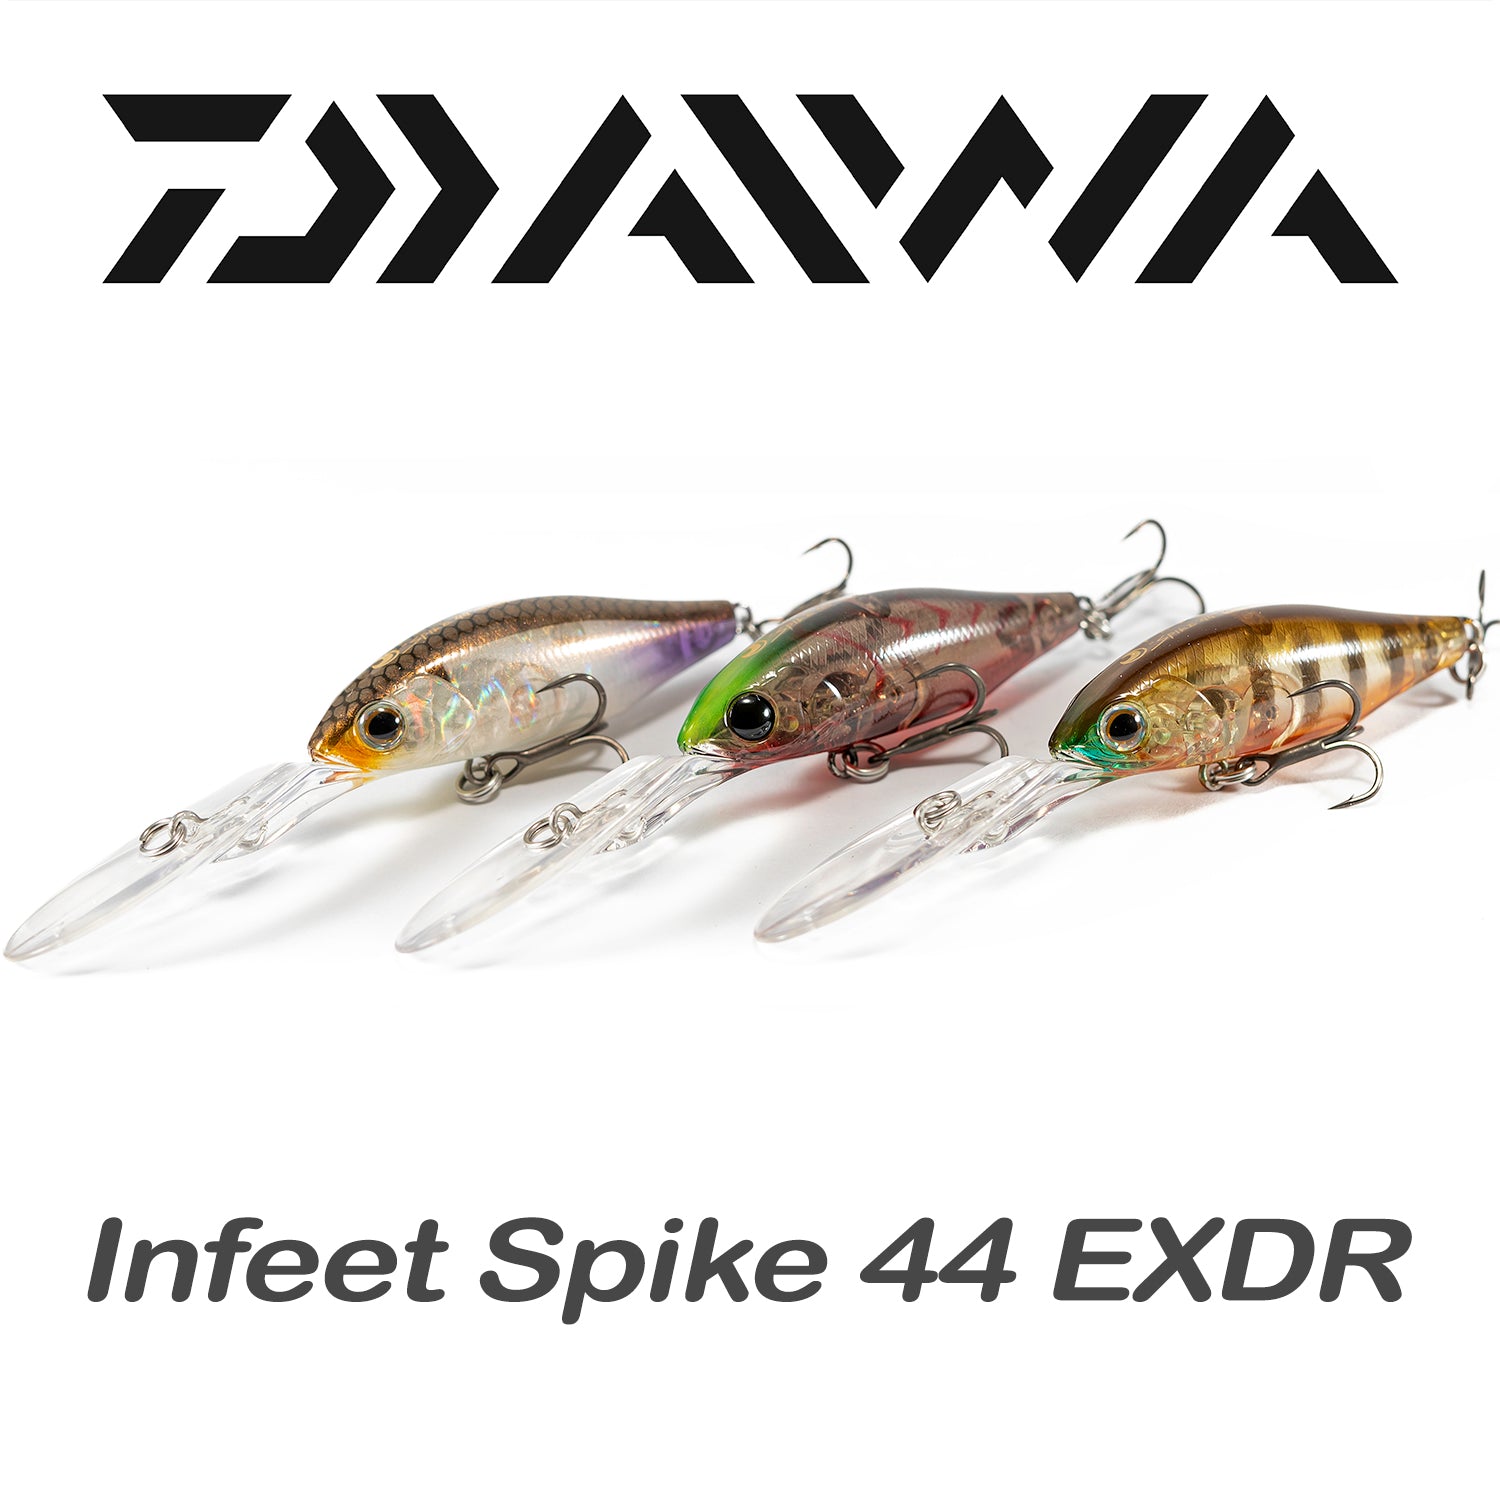 Daiwa Infeet Spike 44 EXDR Cover